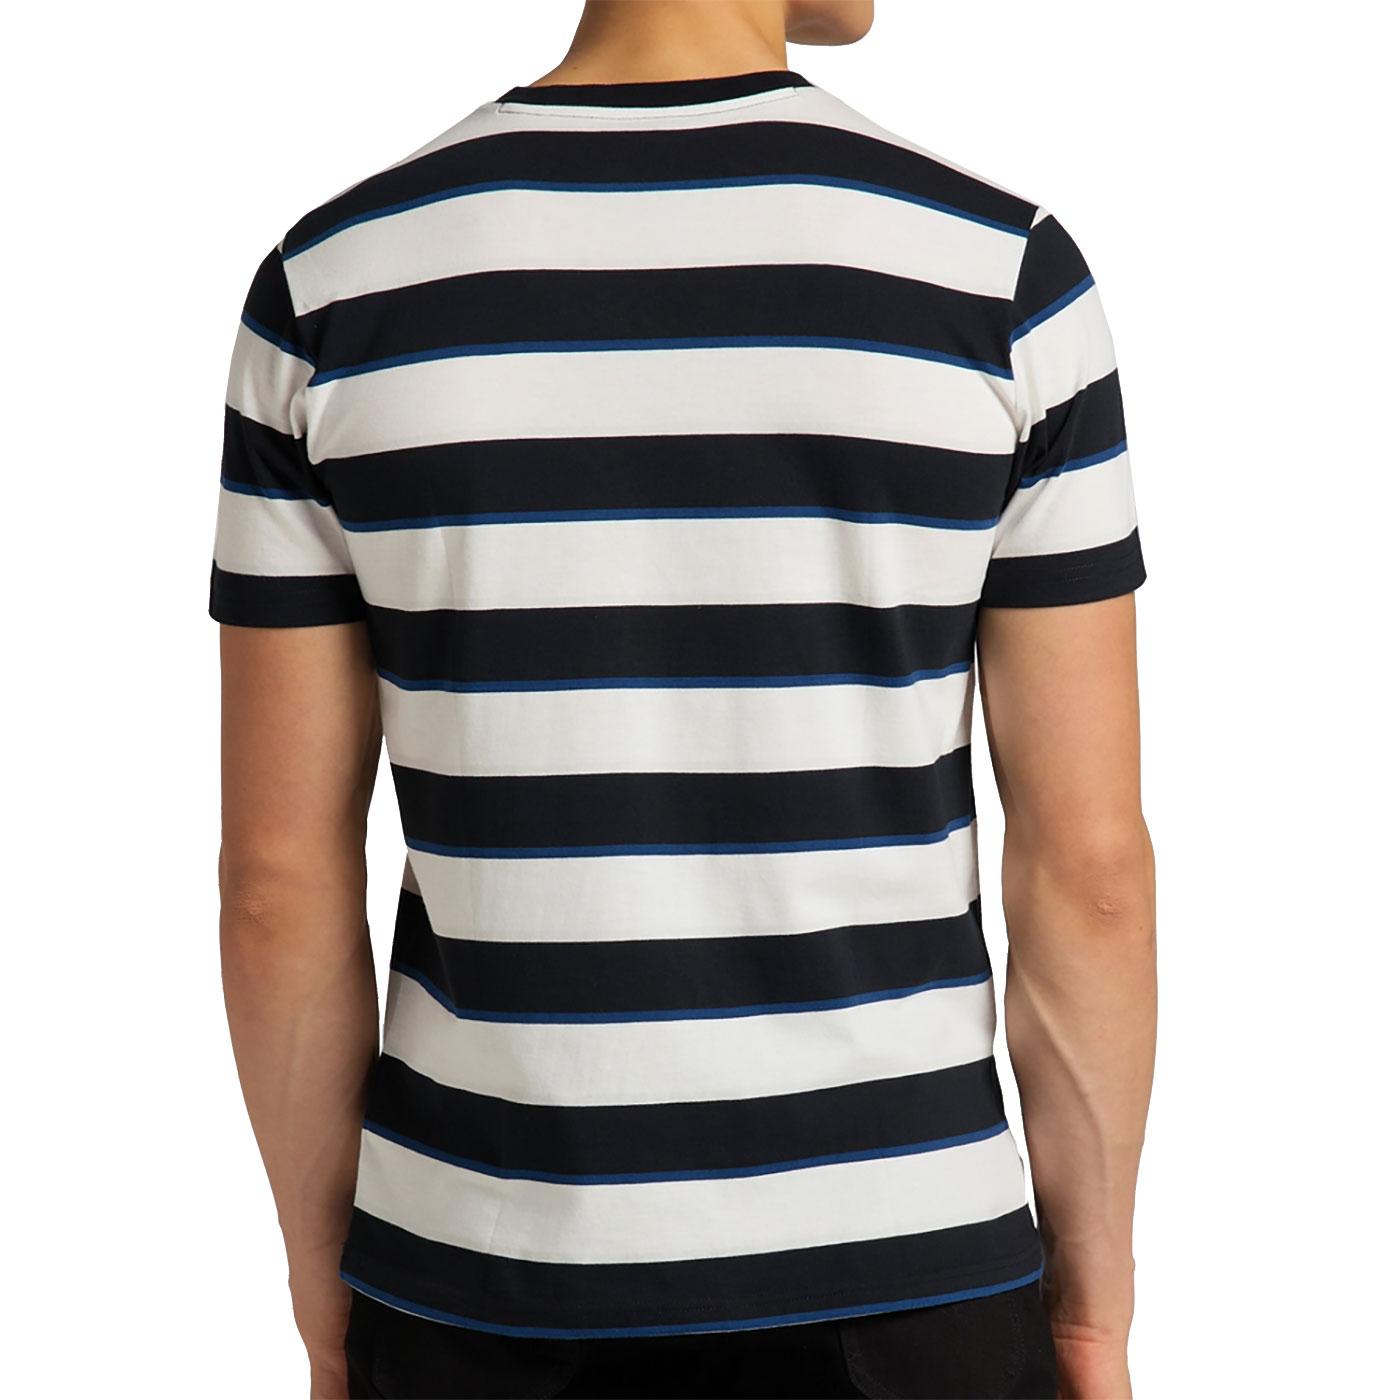 LEE JEANS Retro Mod Multi Stripe T-Shirt in Black